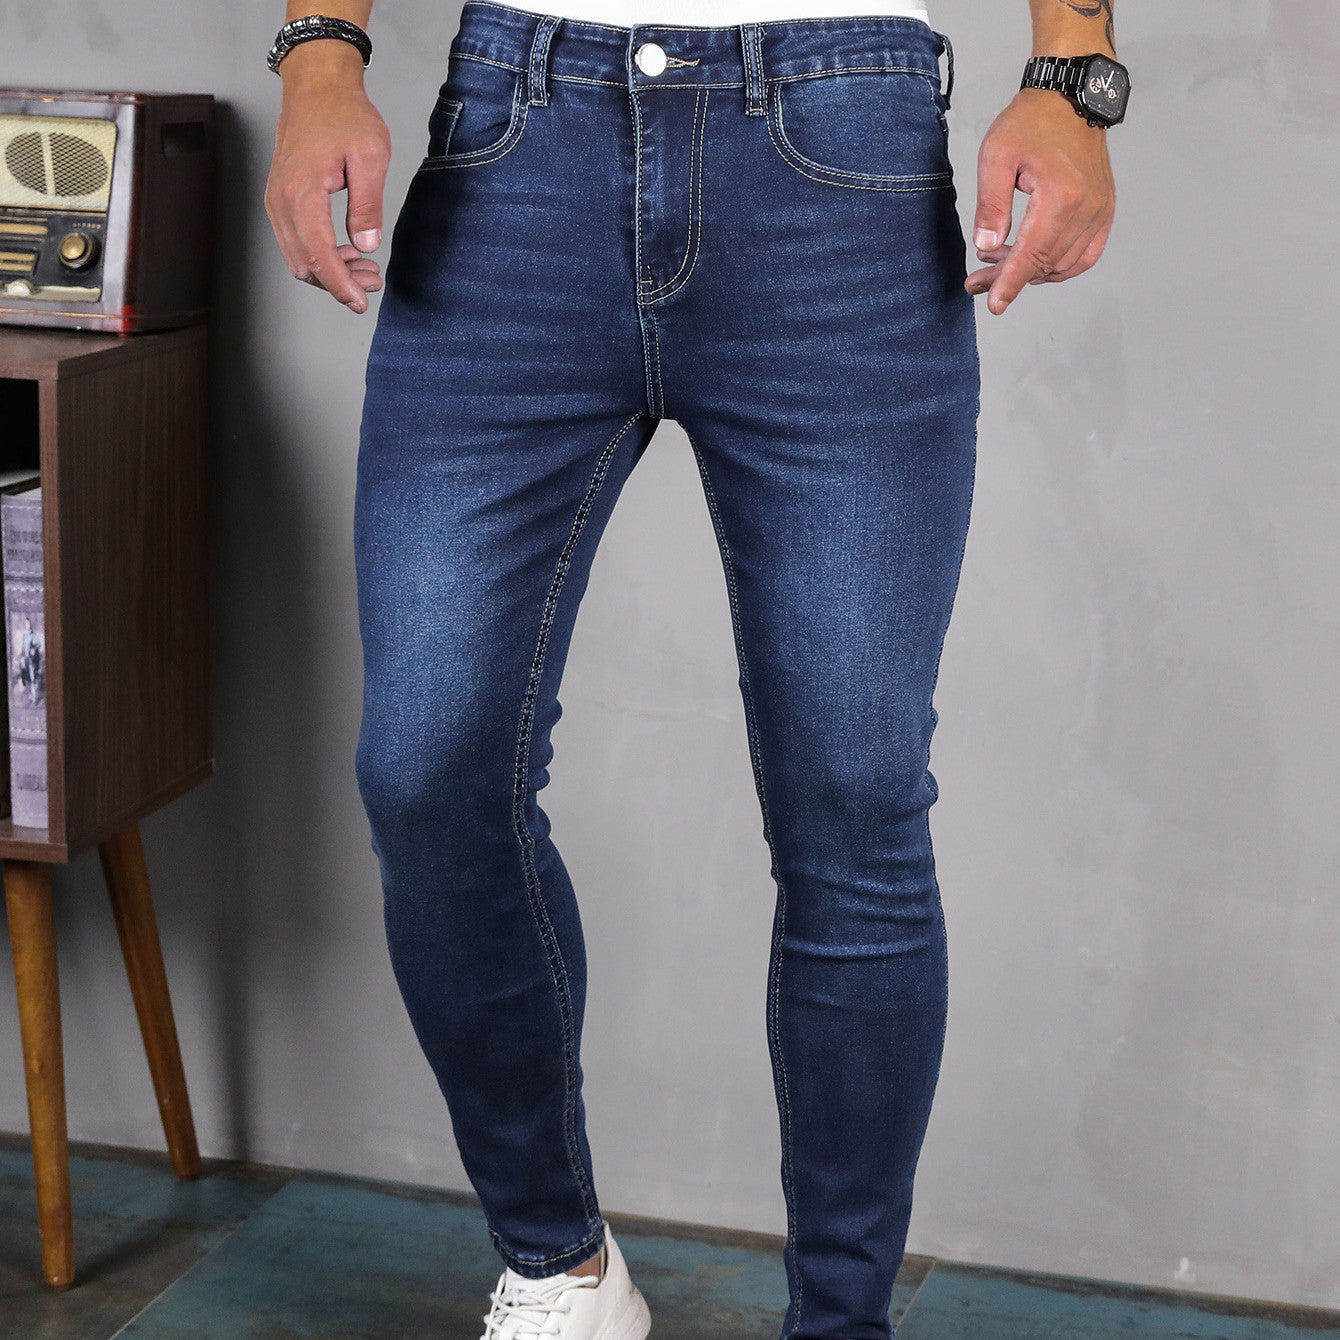 Men's Fashion Skinny Jeans | Stretchy, Dark & Light Blue from Eternal Gleams